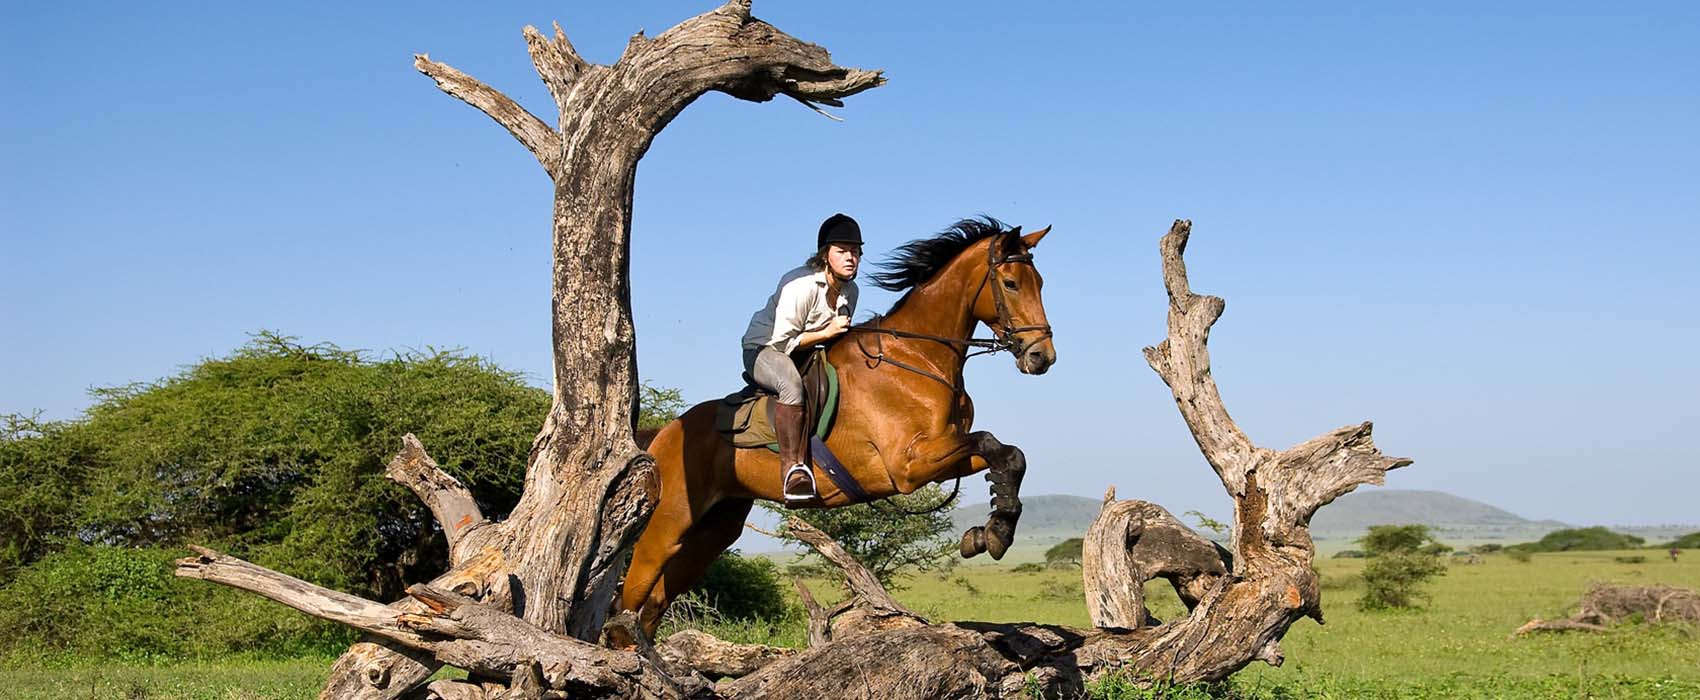 horse riding safaris in africa